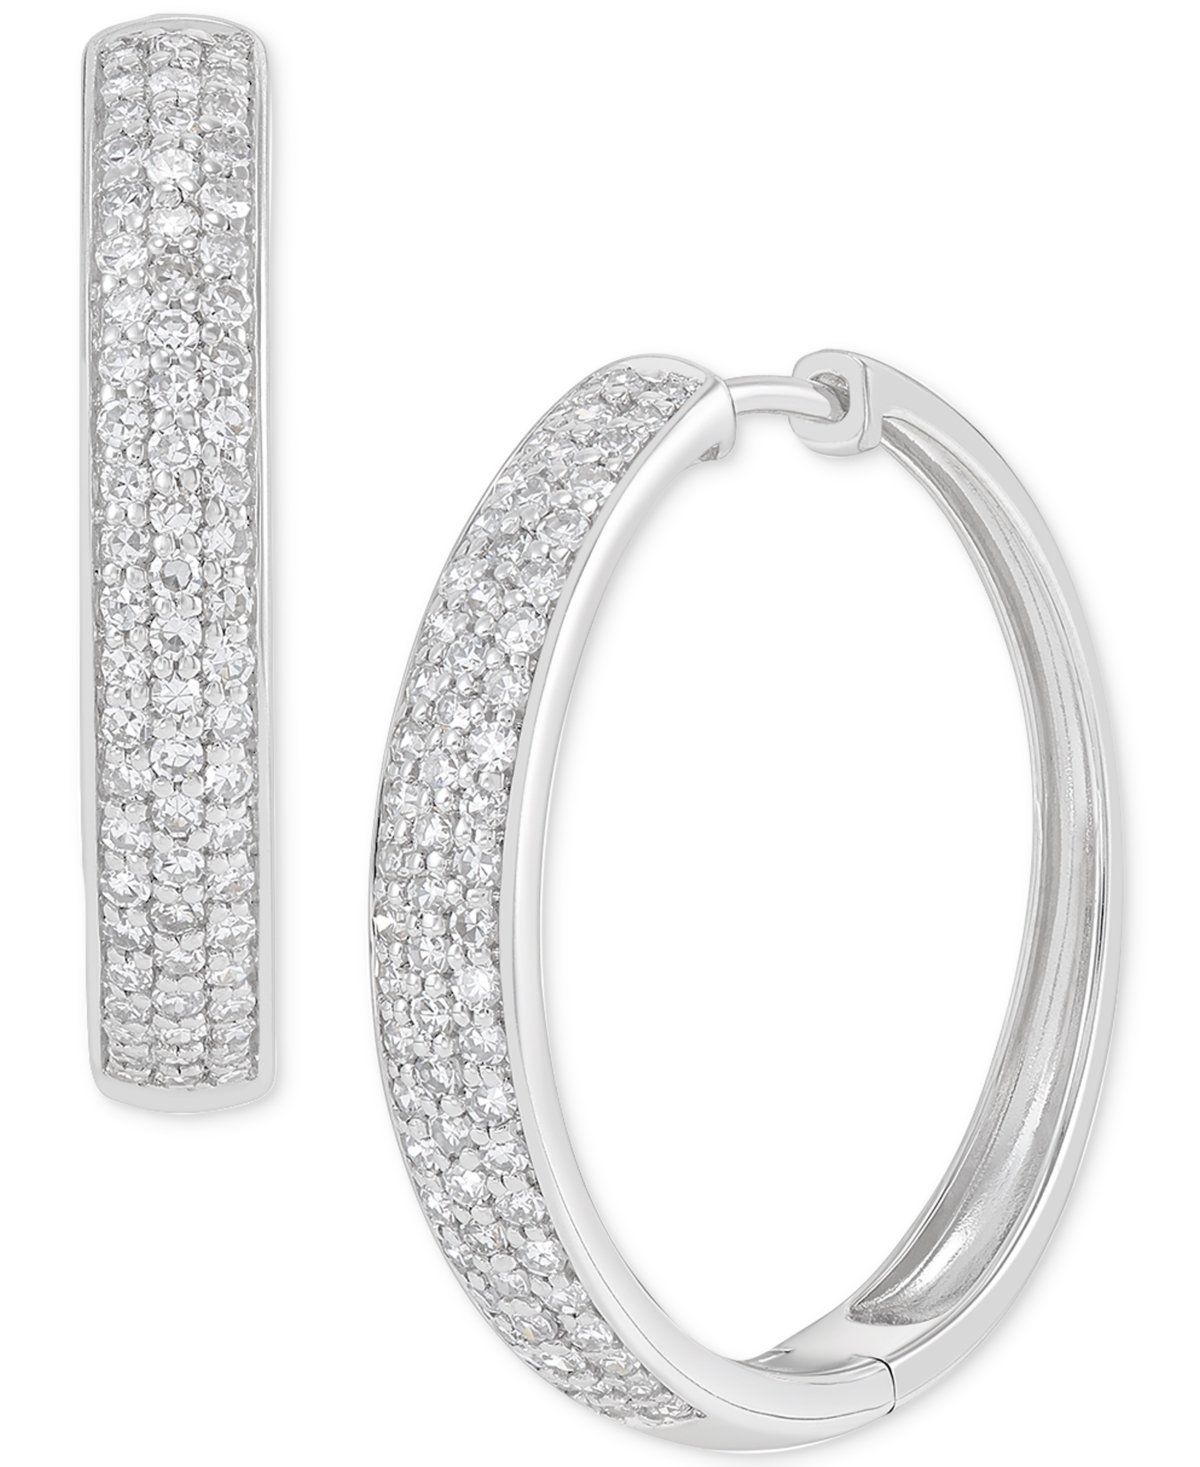 Lab Grown Small Diamond Hoop Earrings (1 ct. t.w.) in Sterling Silver, 1" - Sterling Silver